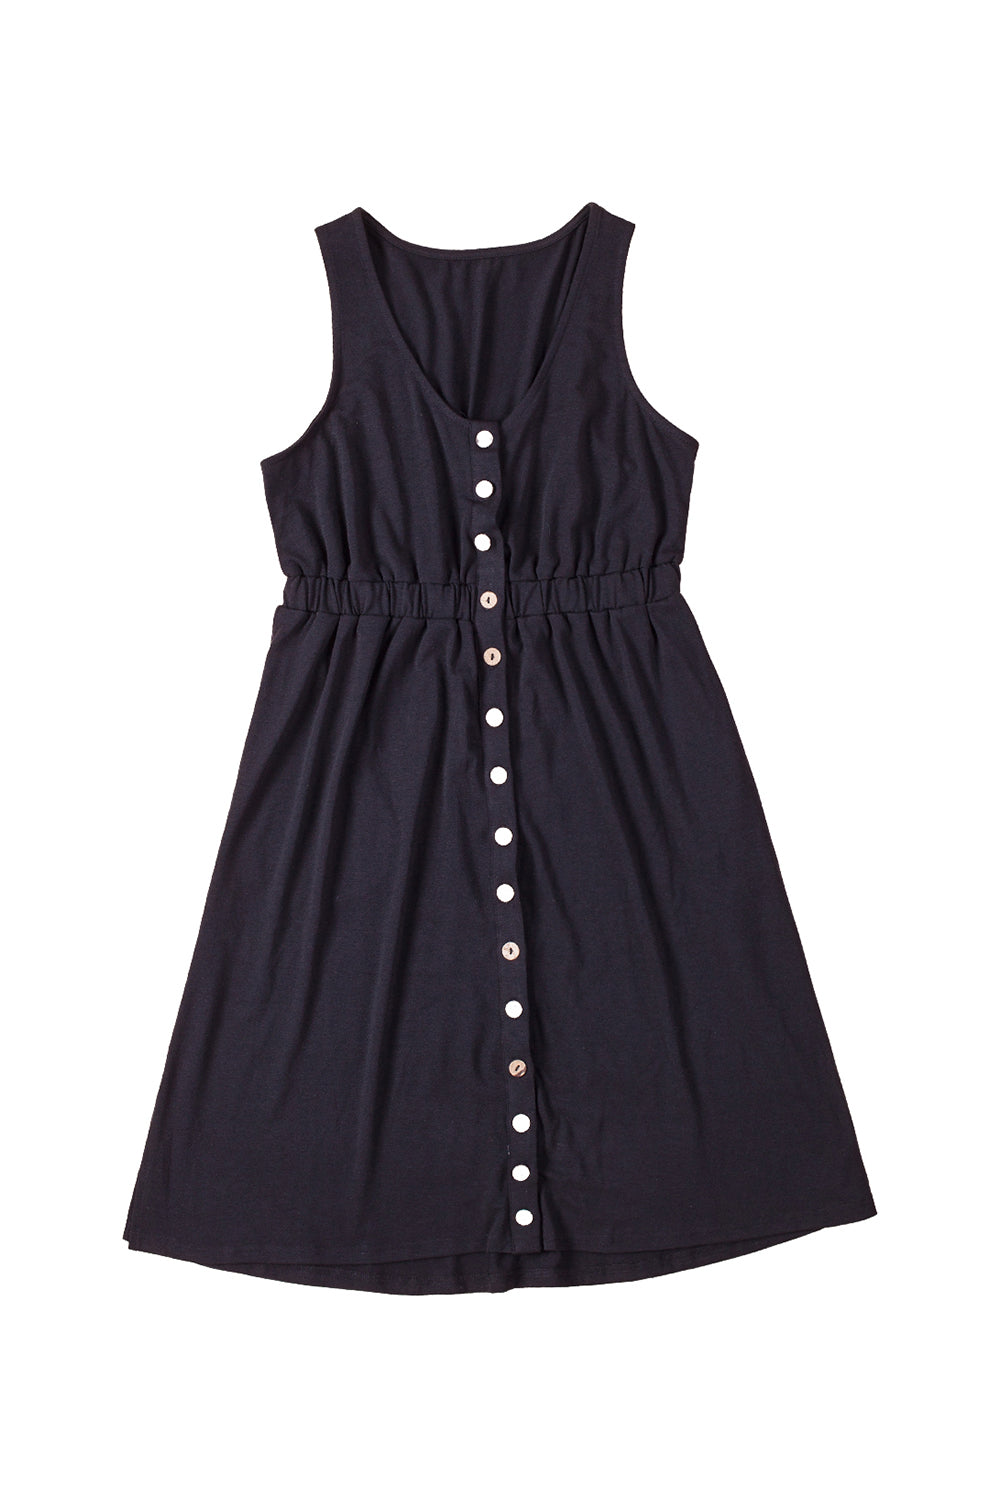 Button Front Shirred Waist Casual Tank Summer Black Dress